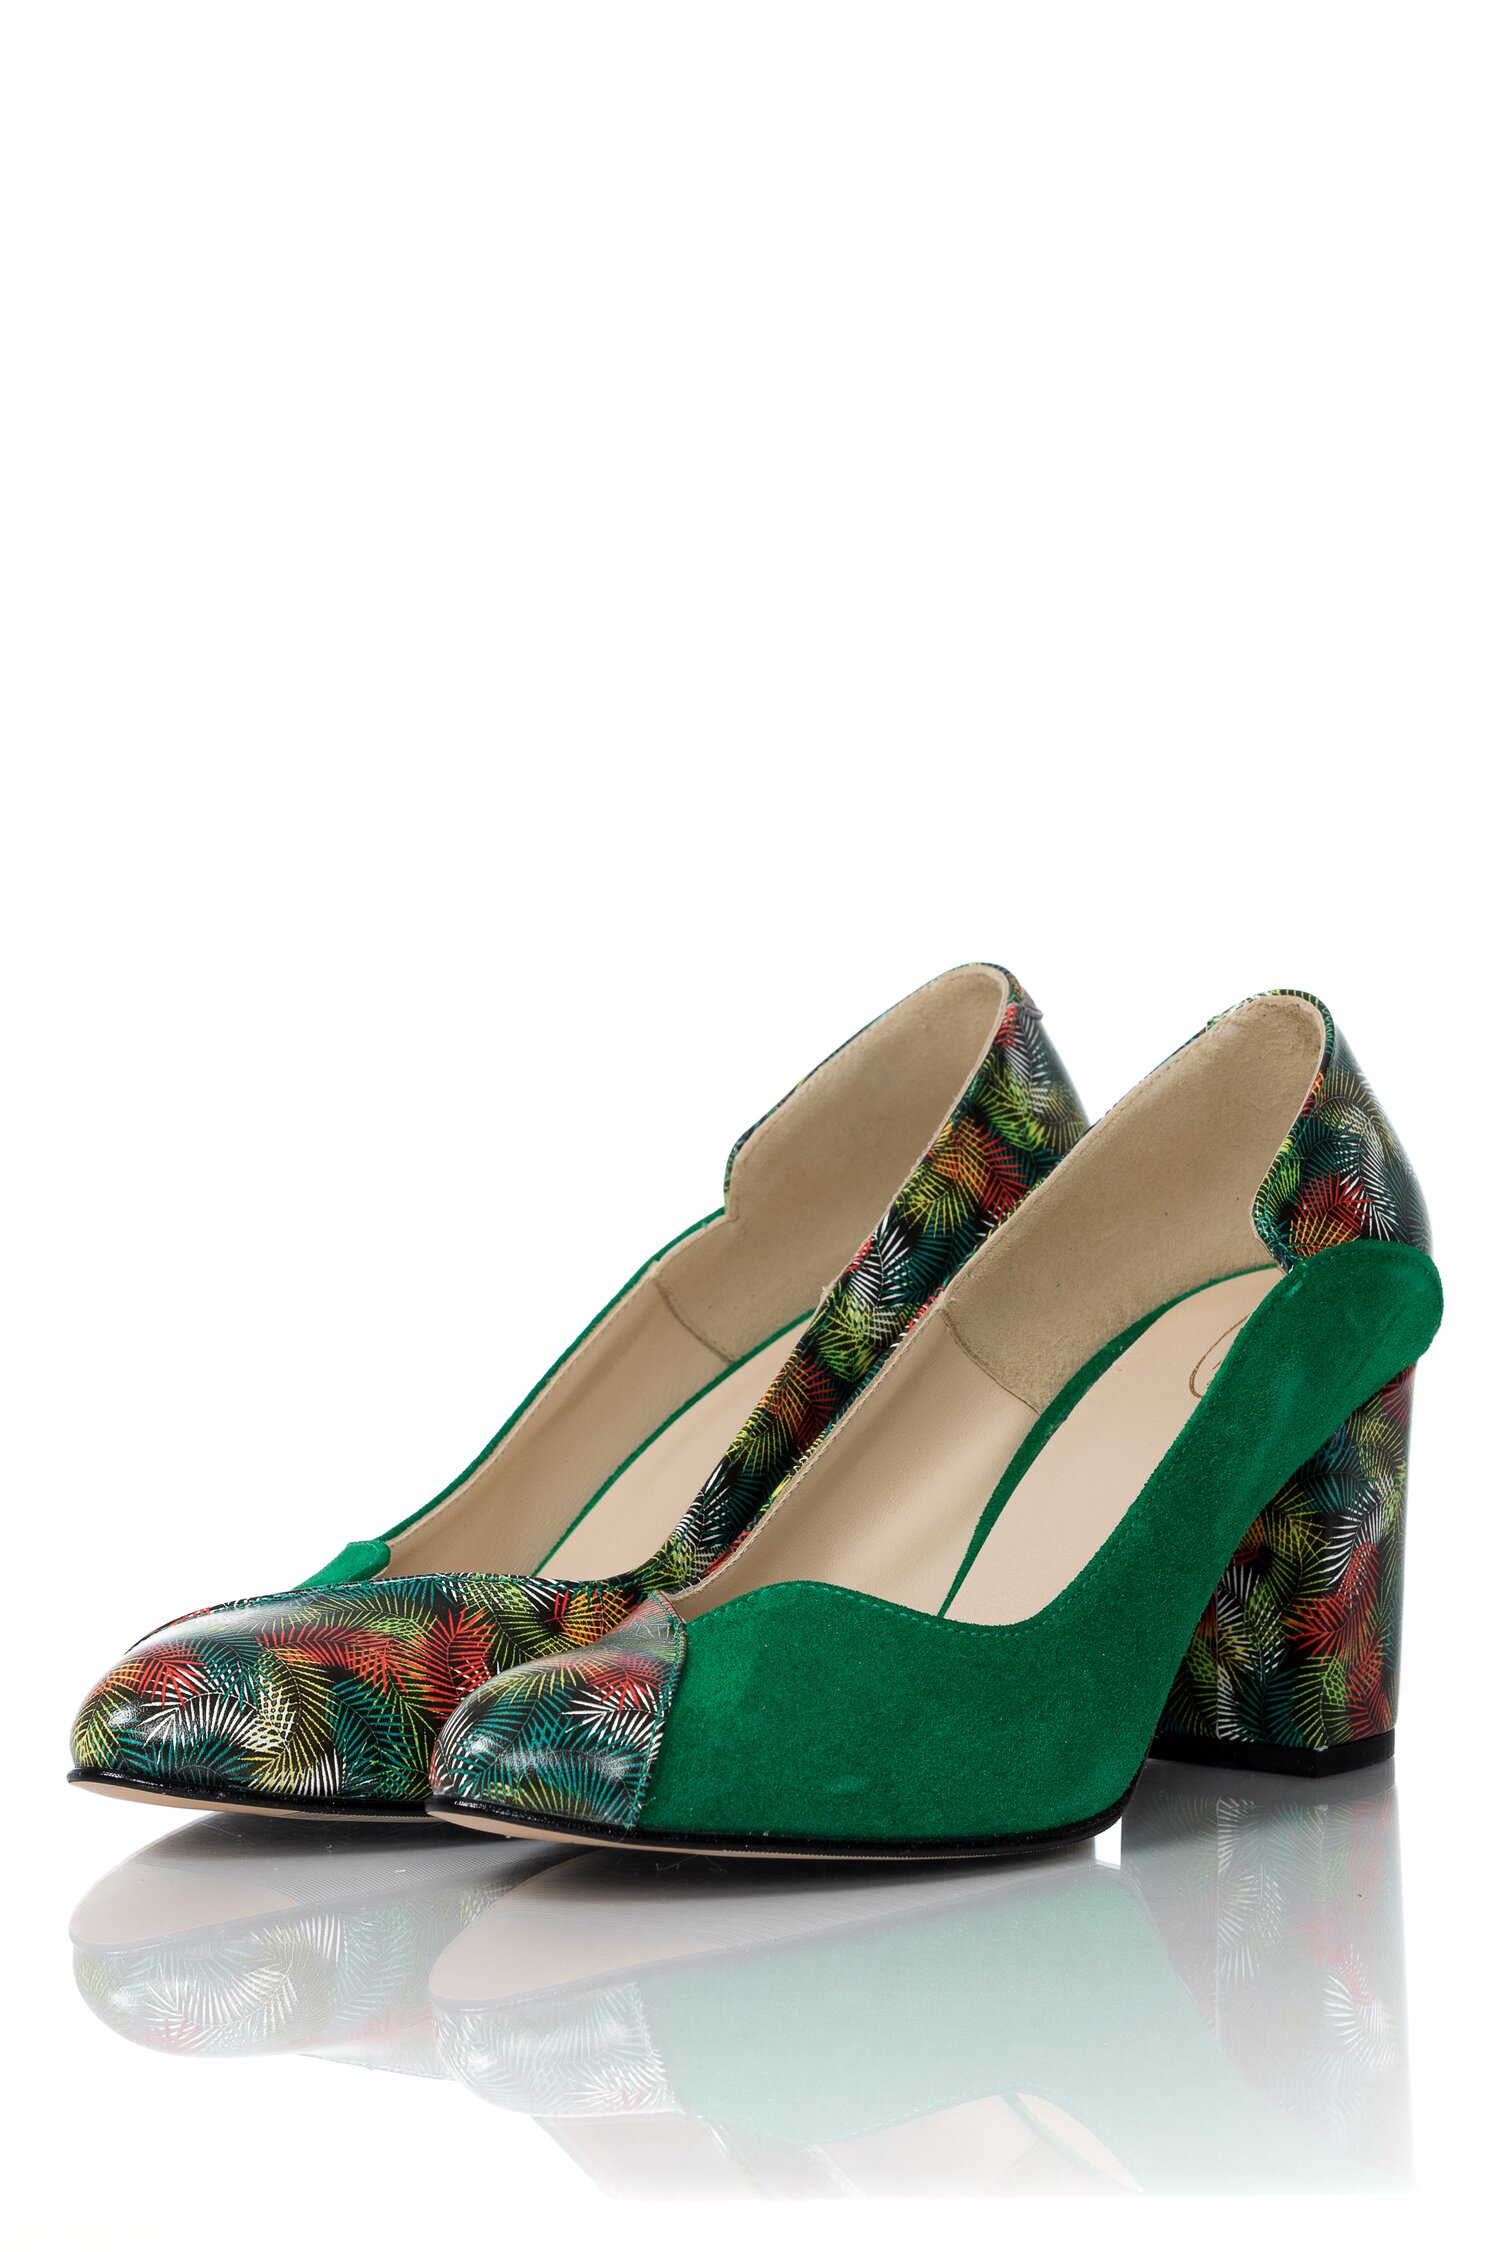 Pantofi Mara verzi cu imprimeu floral dyfashion.ro imagine megaplaza.ro